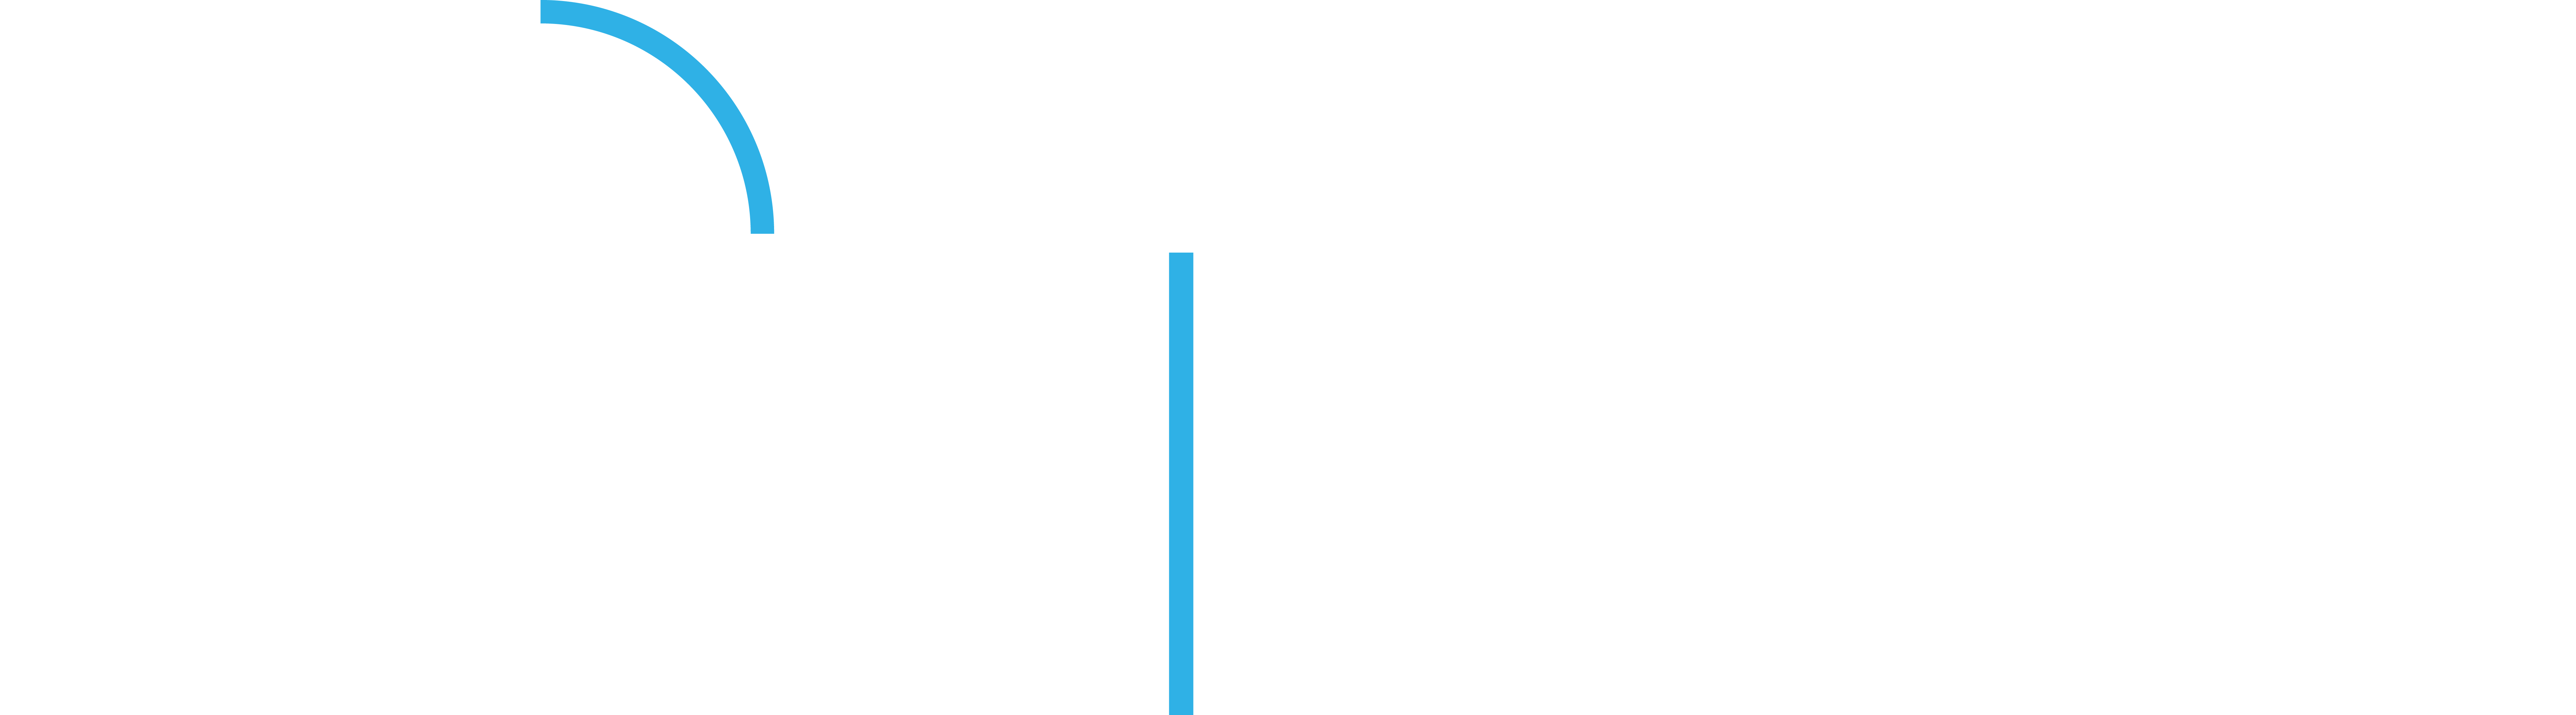 logo_ctc_create_to_communicate_white